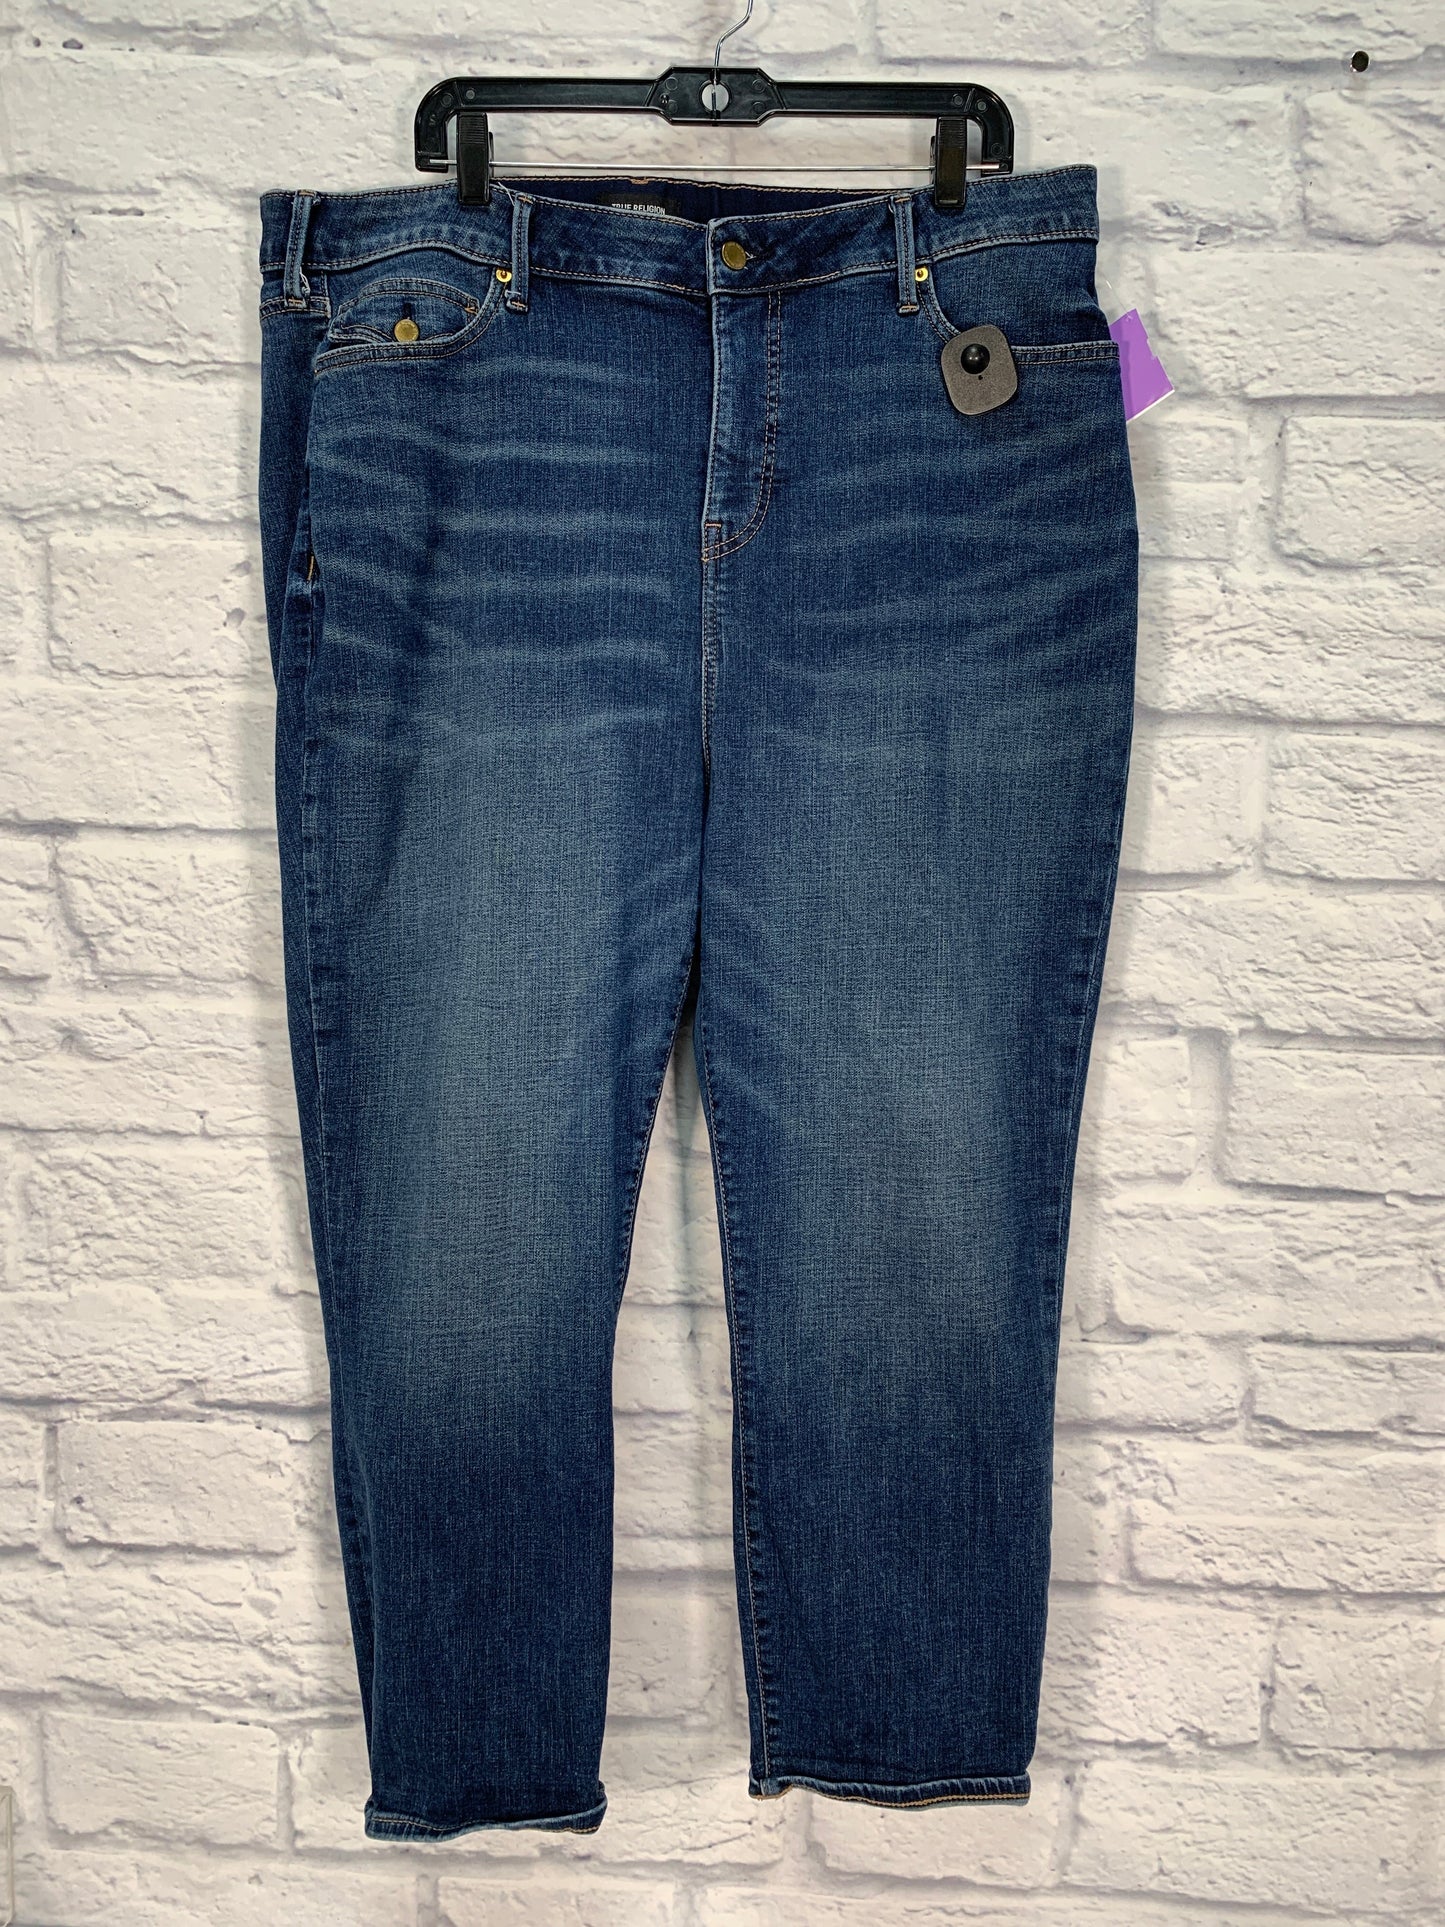 Blue Denim Jeans Designer True Religion, Size 24w